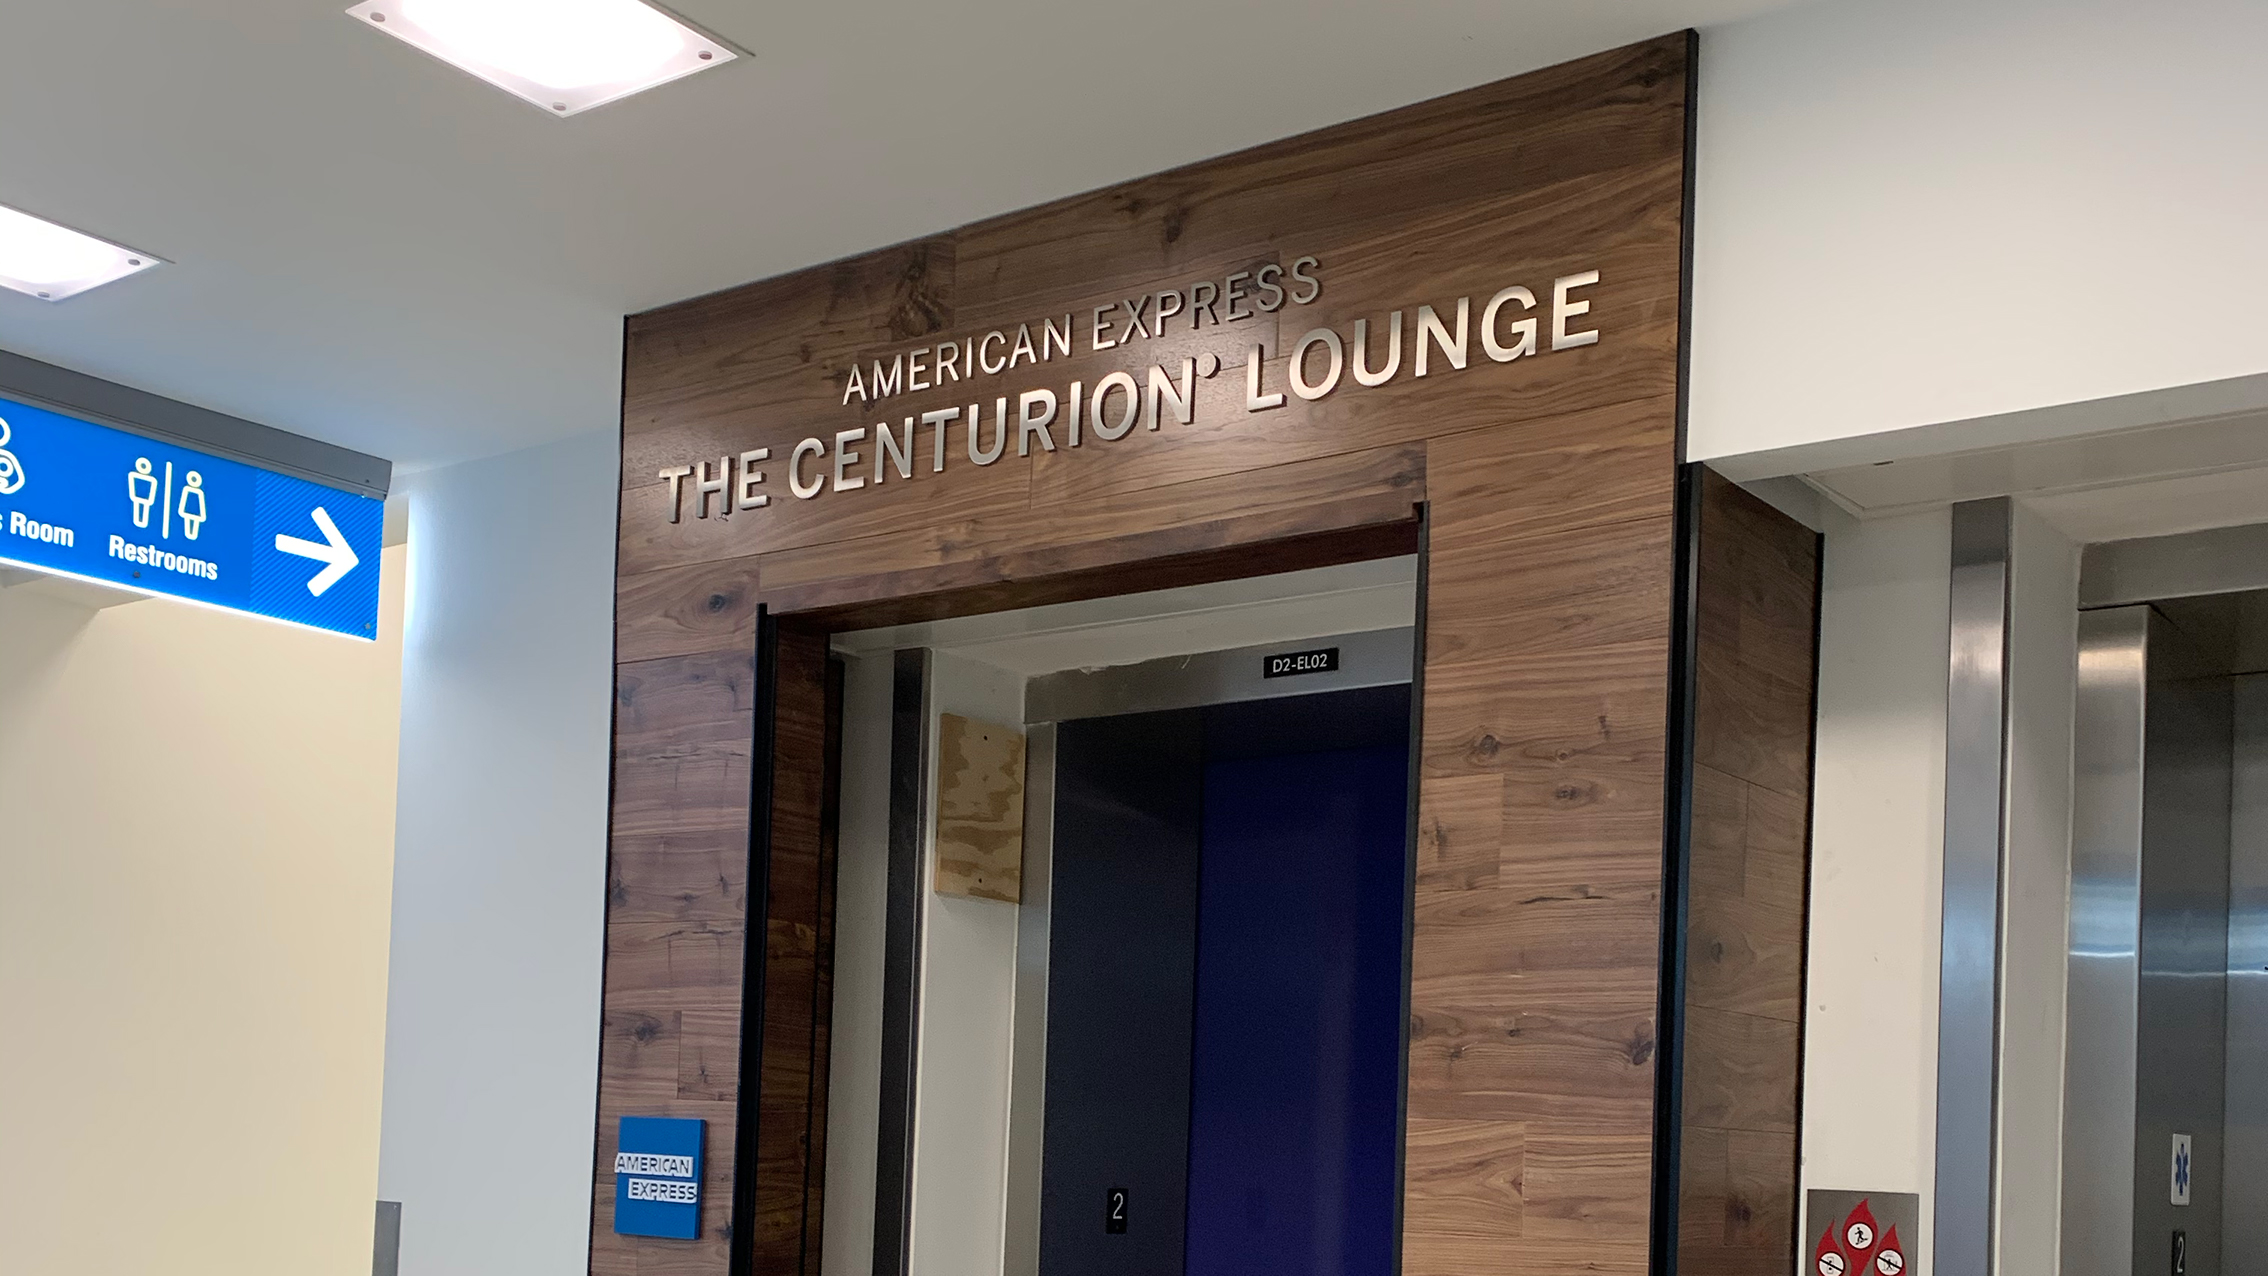 Clt centurion lounge kesilcollections